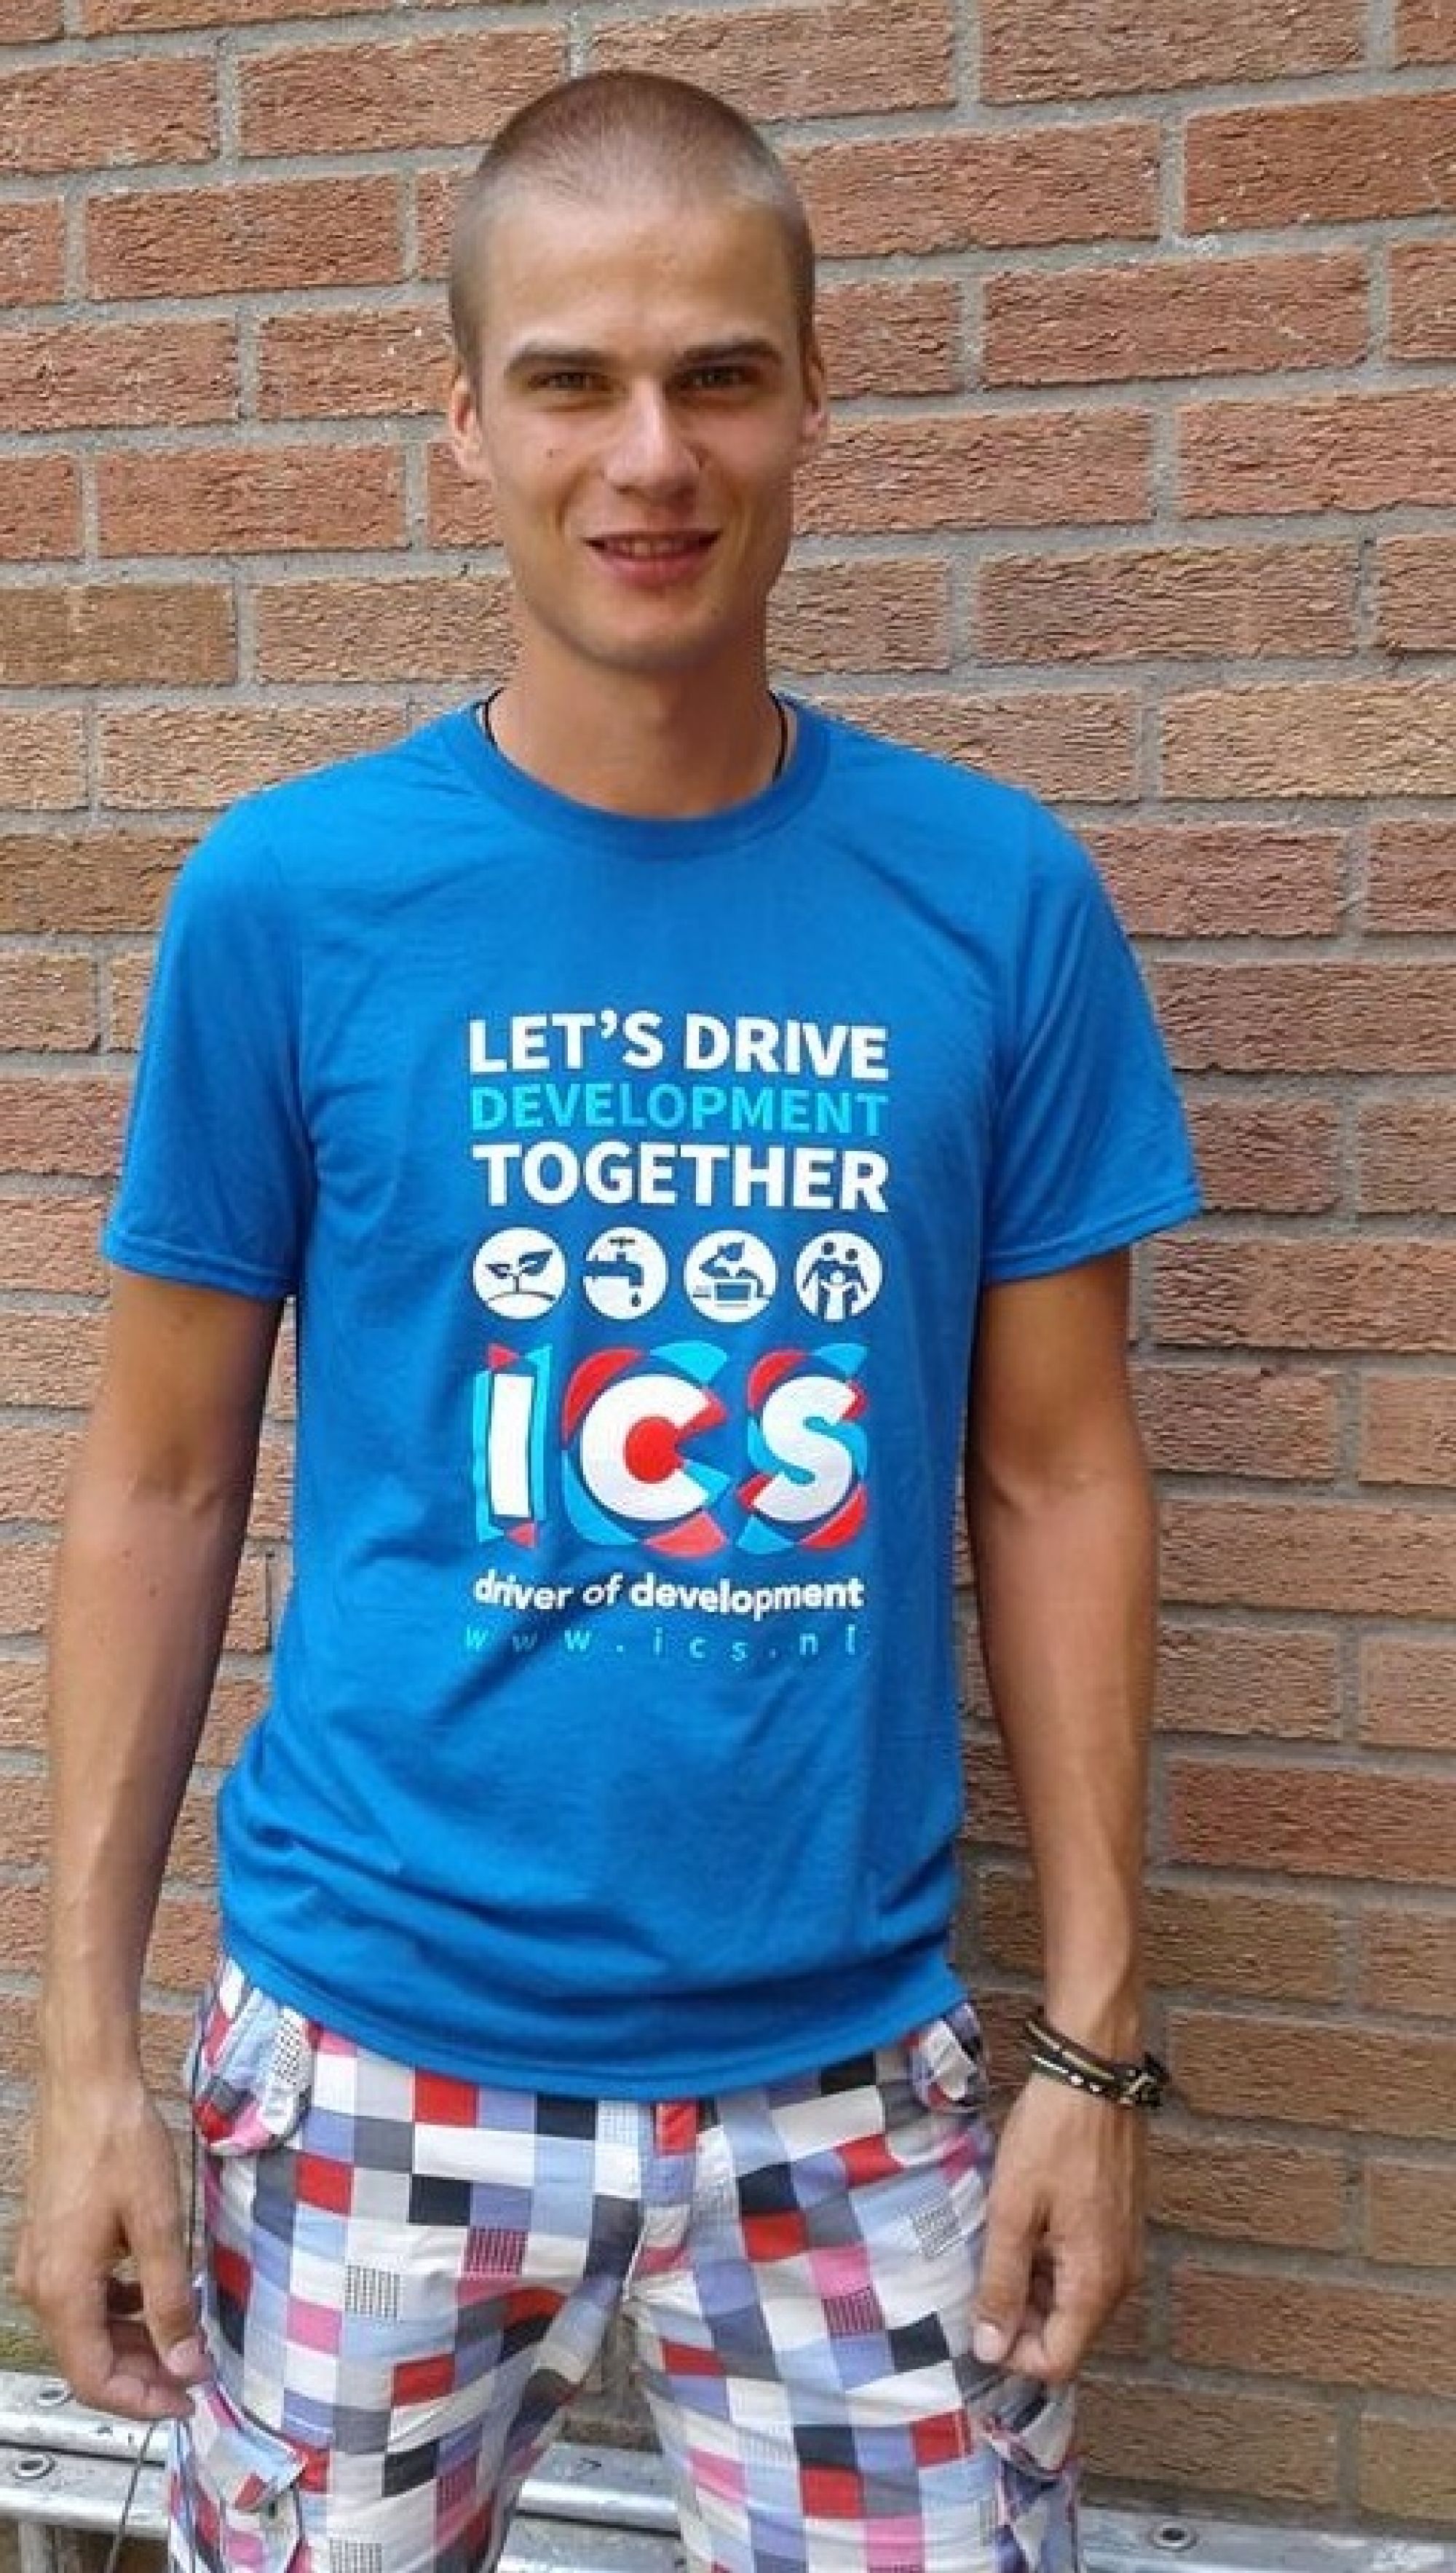 Steven Geerts in ICS shirt web.jpg